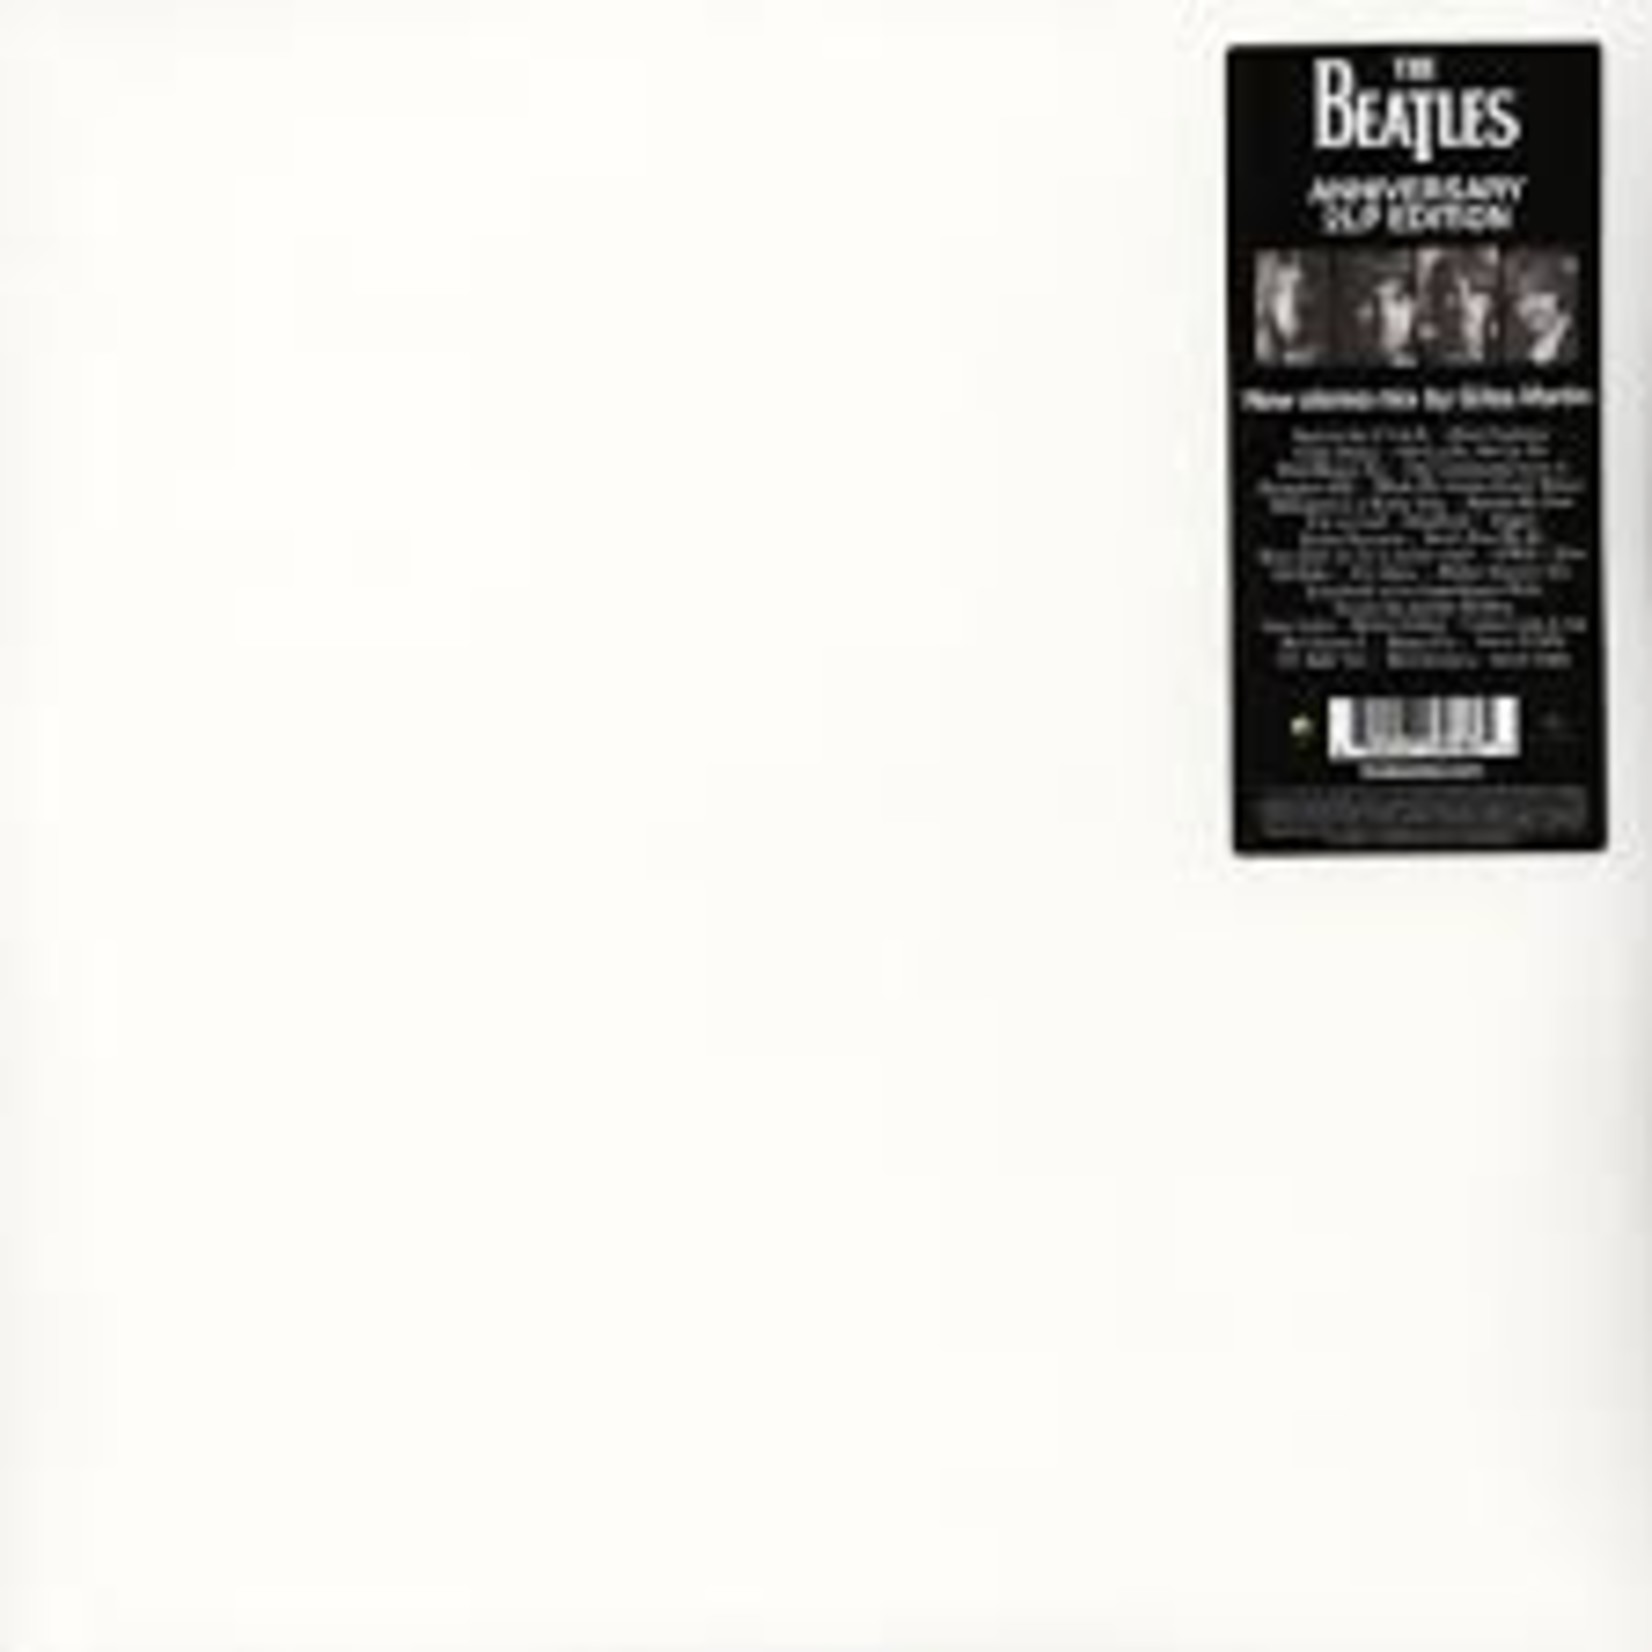 THE BEATLES - white album DLP